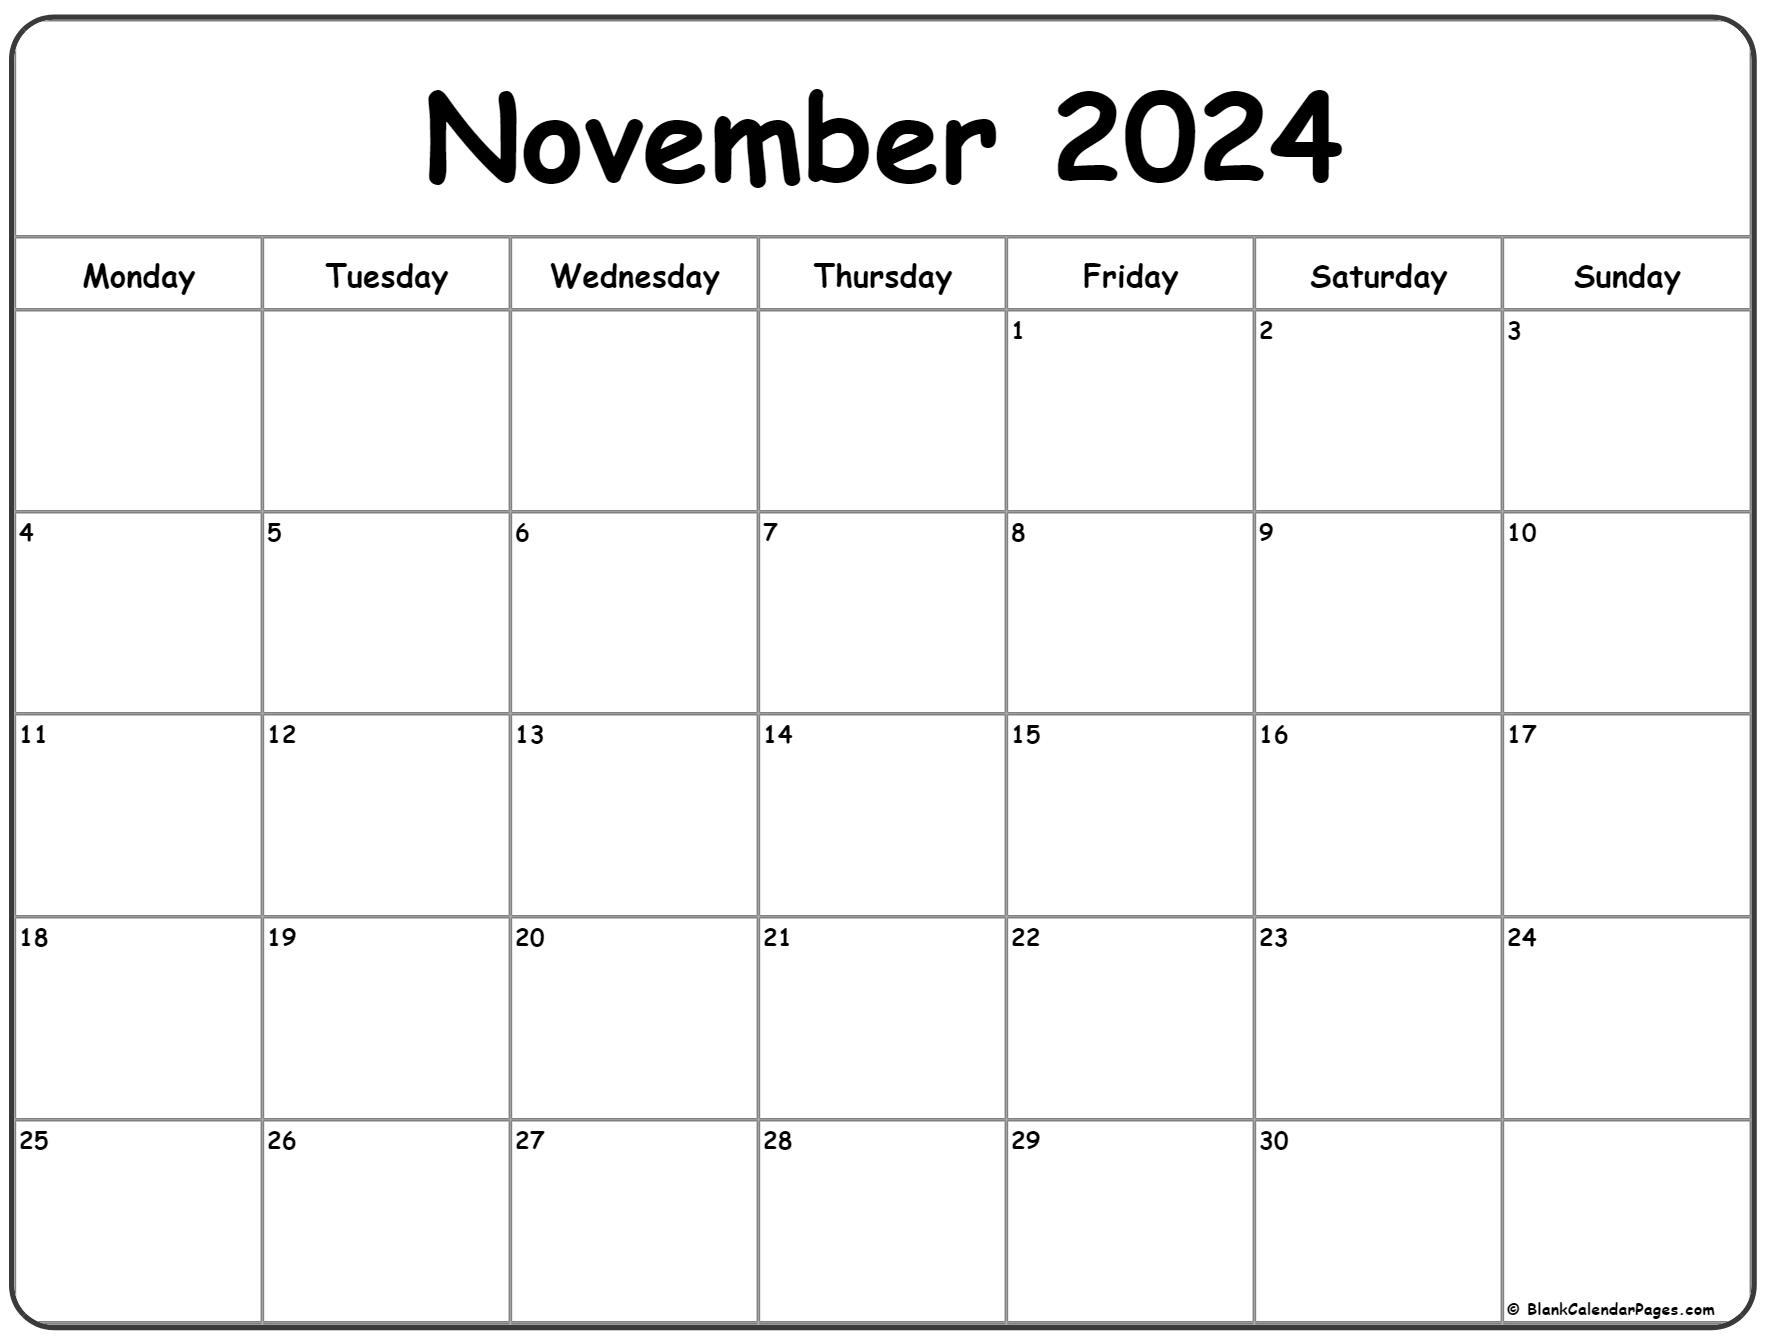 November Monthly Calendar 2022 November 2022 Monday Calendar | Monday To Sunday